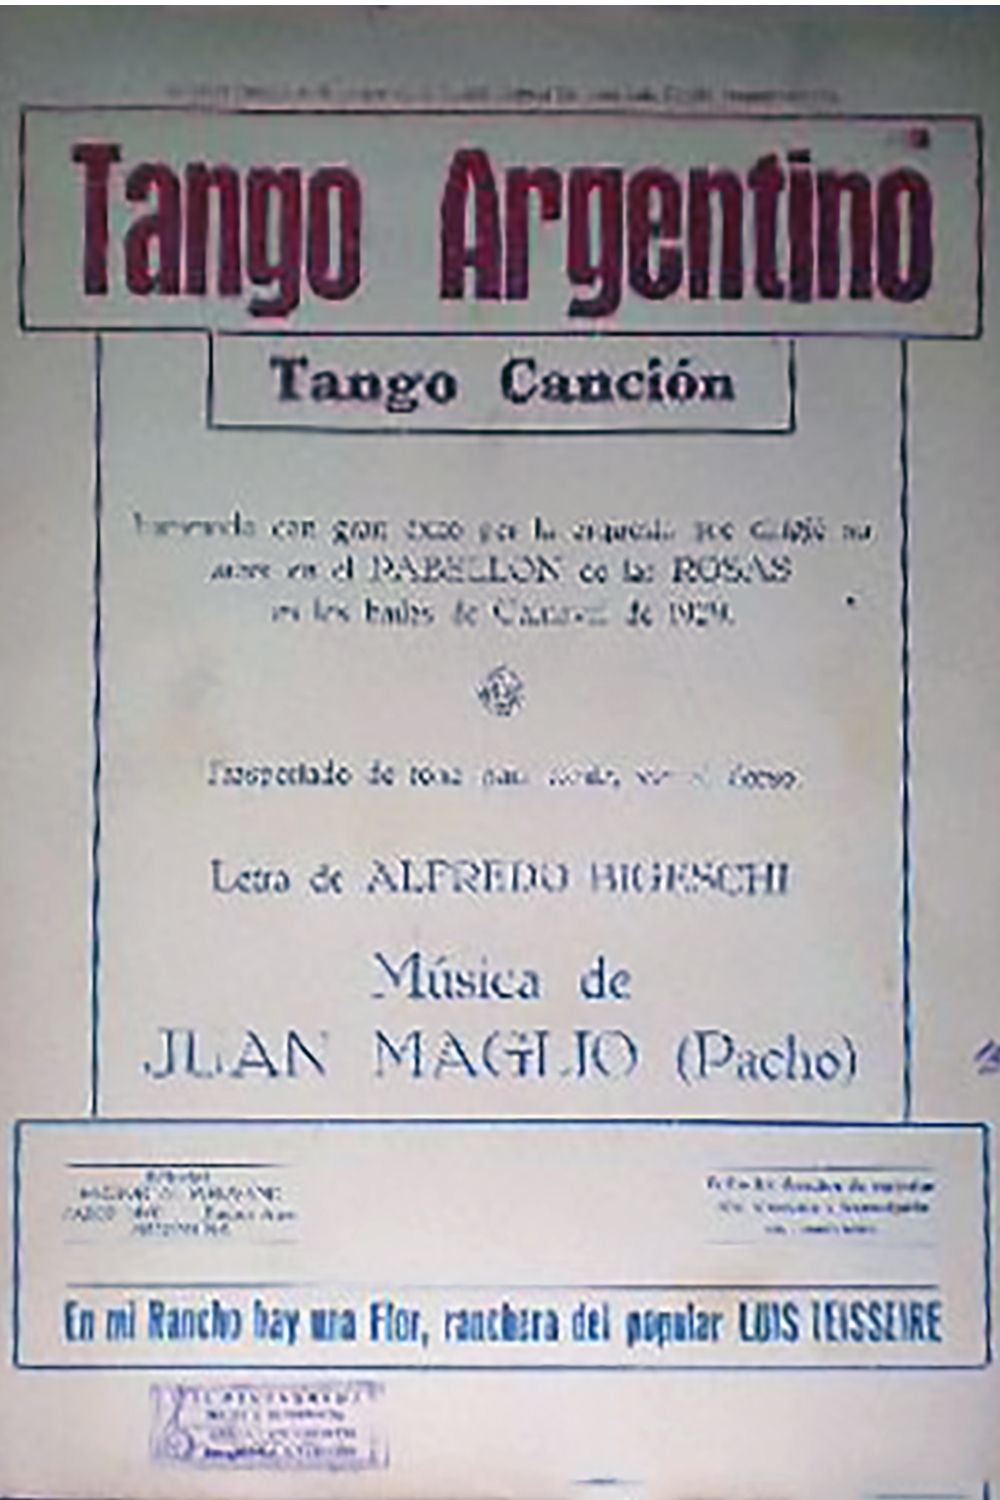 "Tango argentino", Argentine Tango music sheet cover.